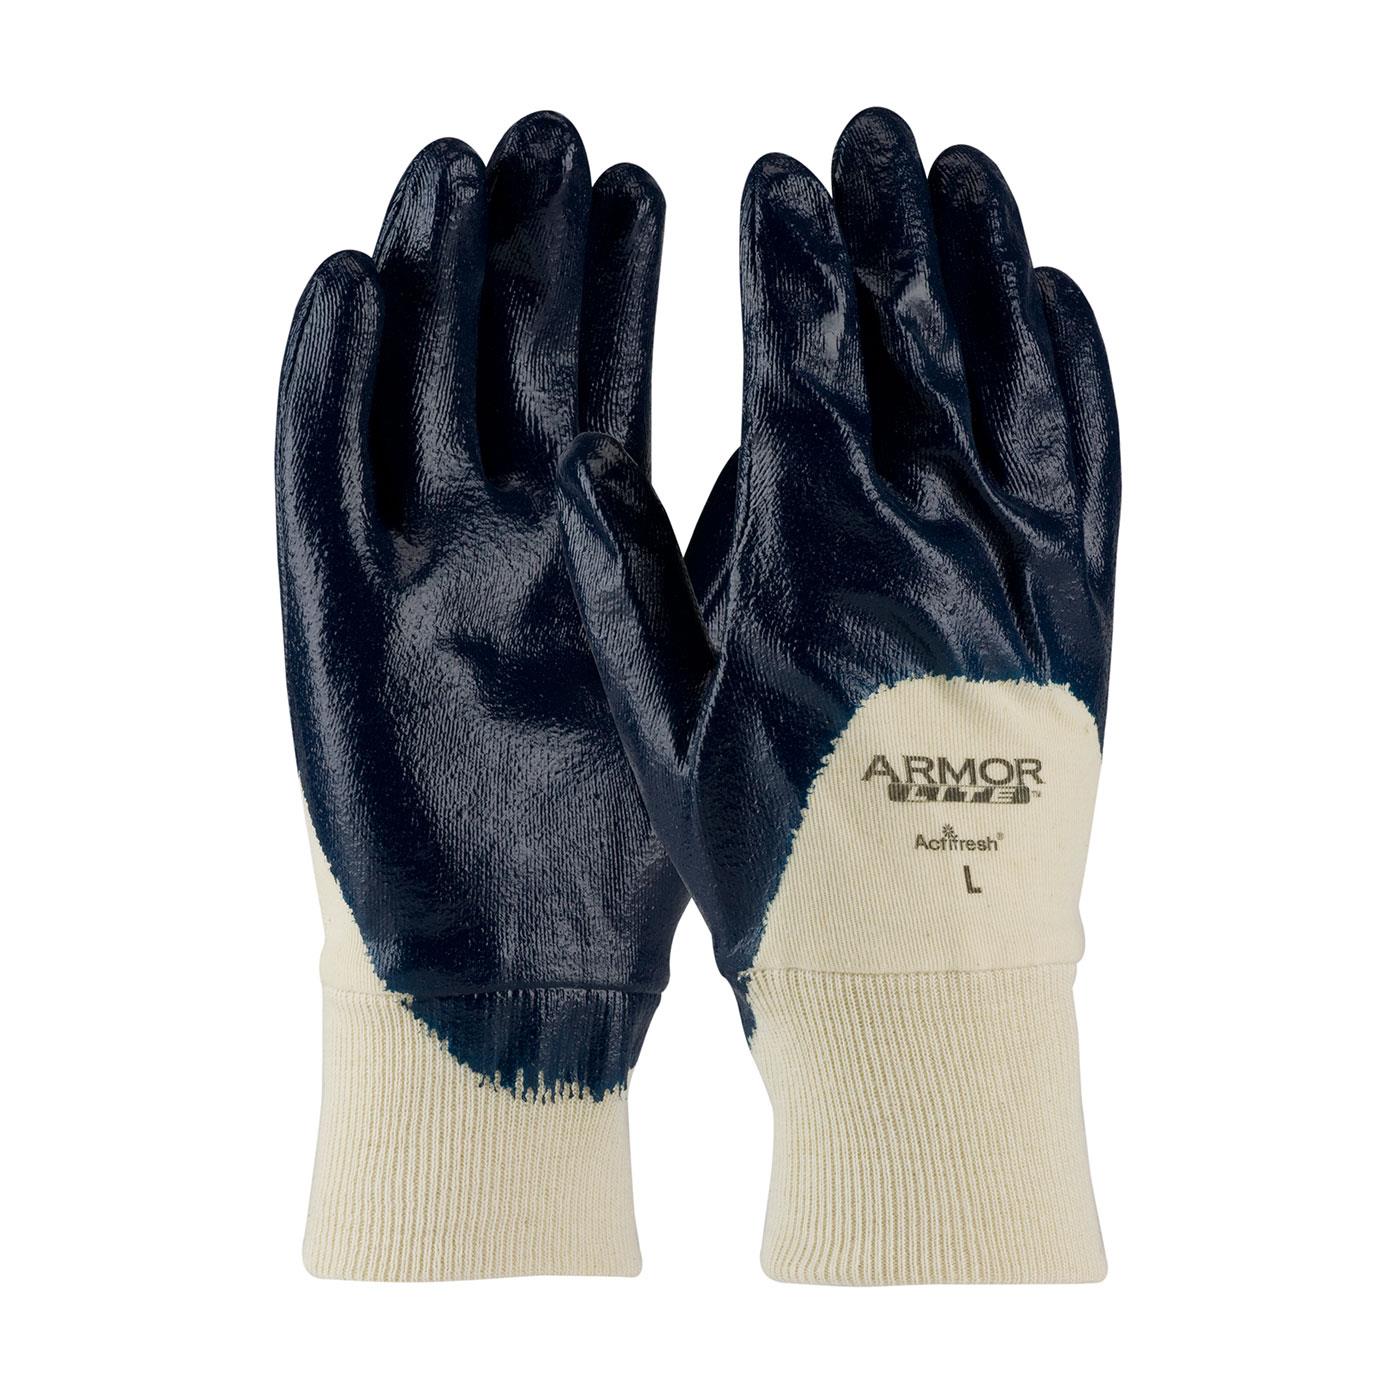 ARMORLITE PALM COATED KNITWRIST - Nitrile Coated Gloves